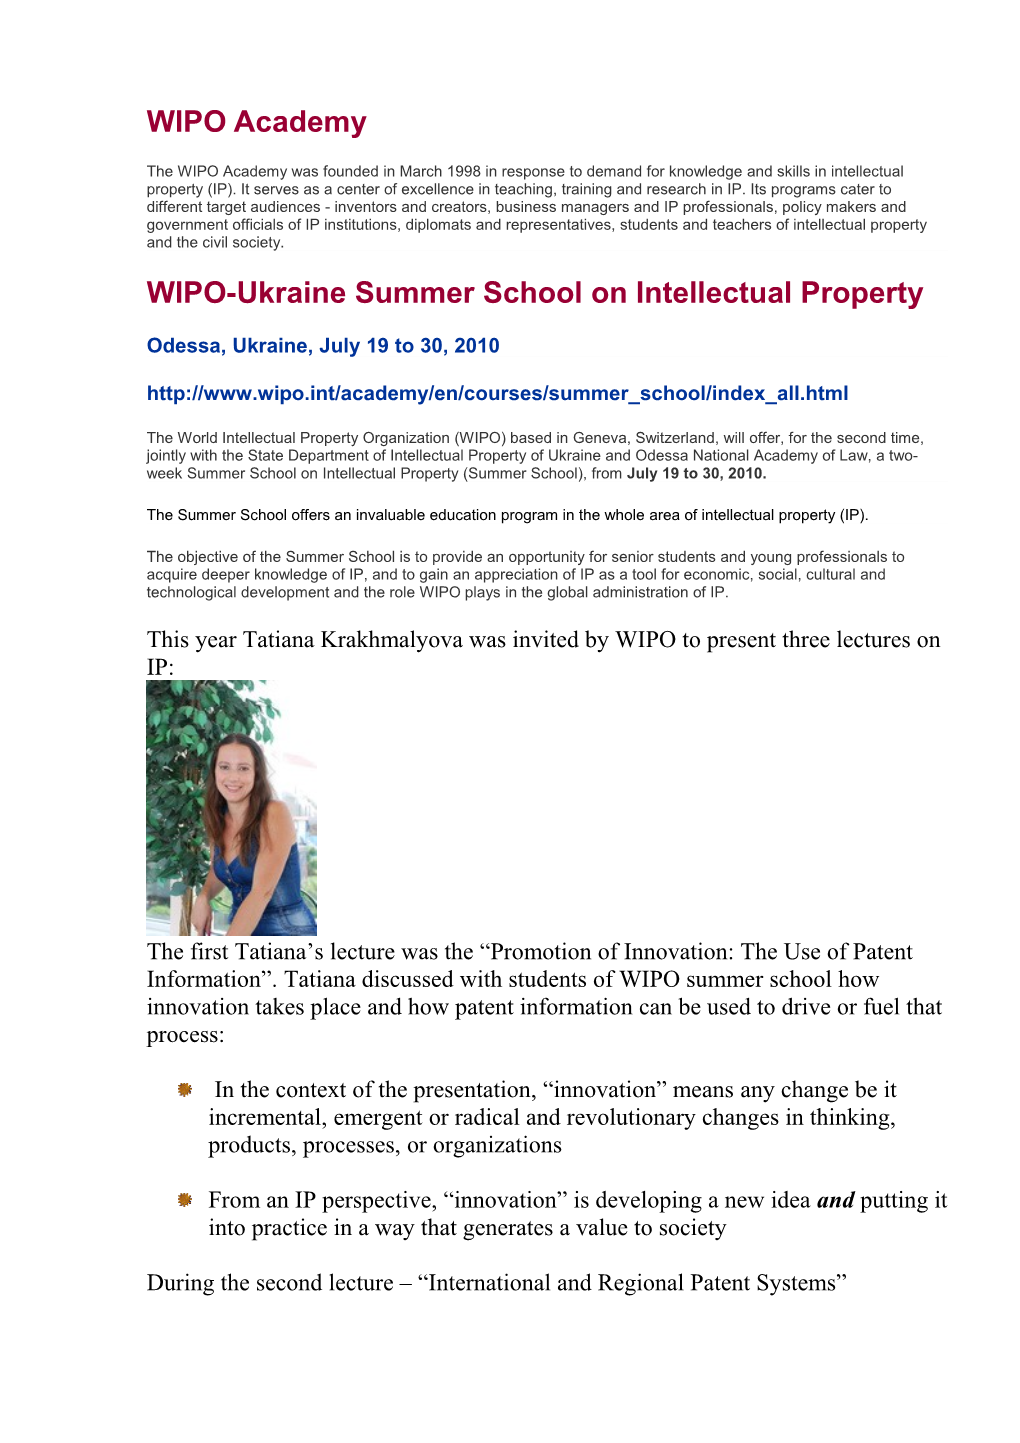 WIPO-Ukraine Summer School on Intellectual Property